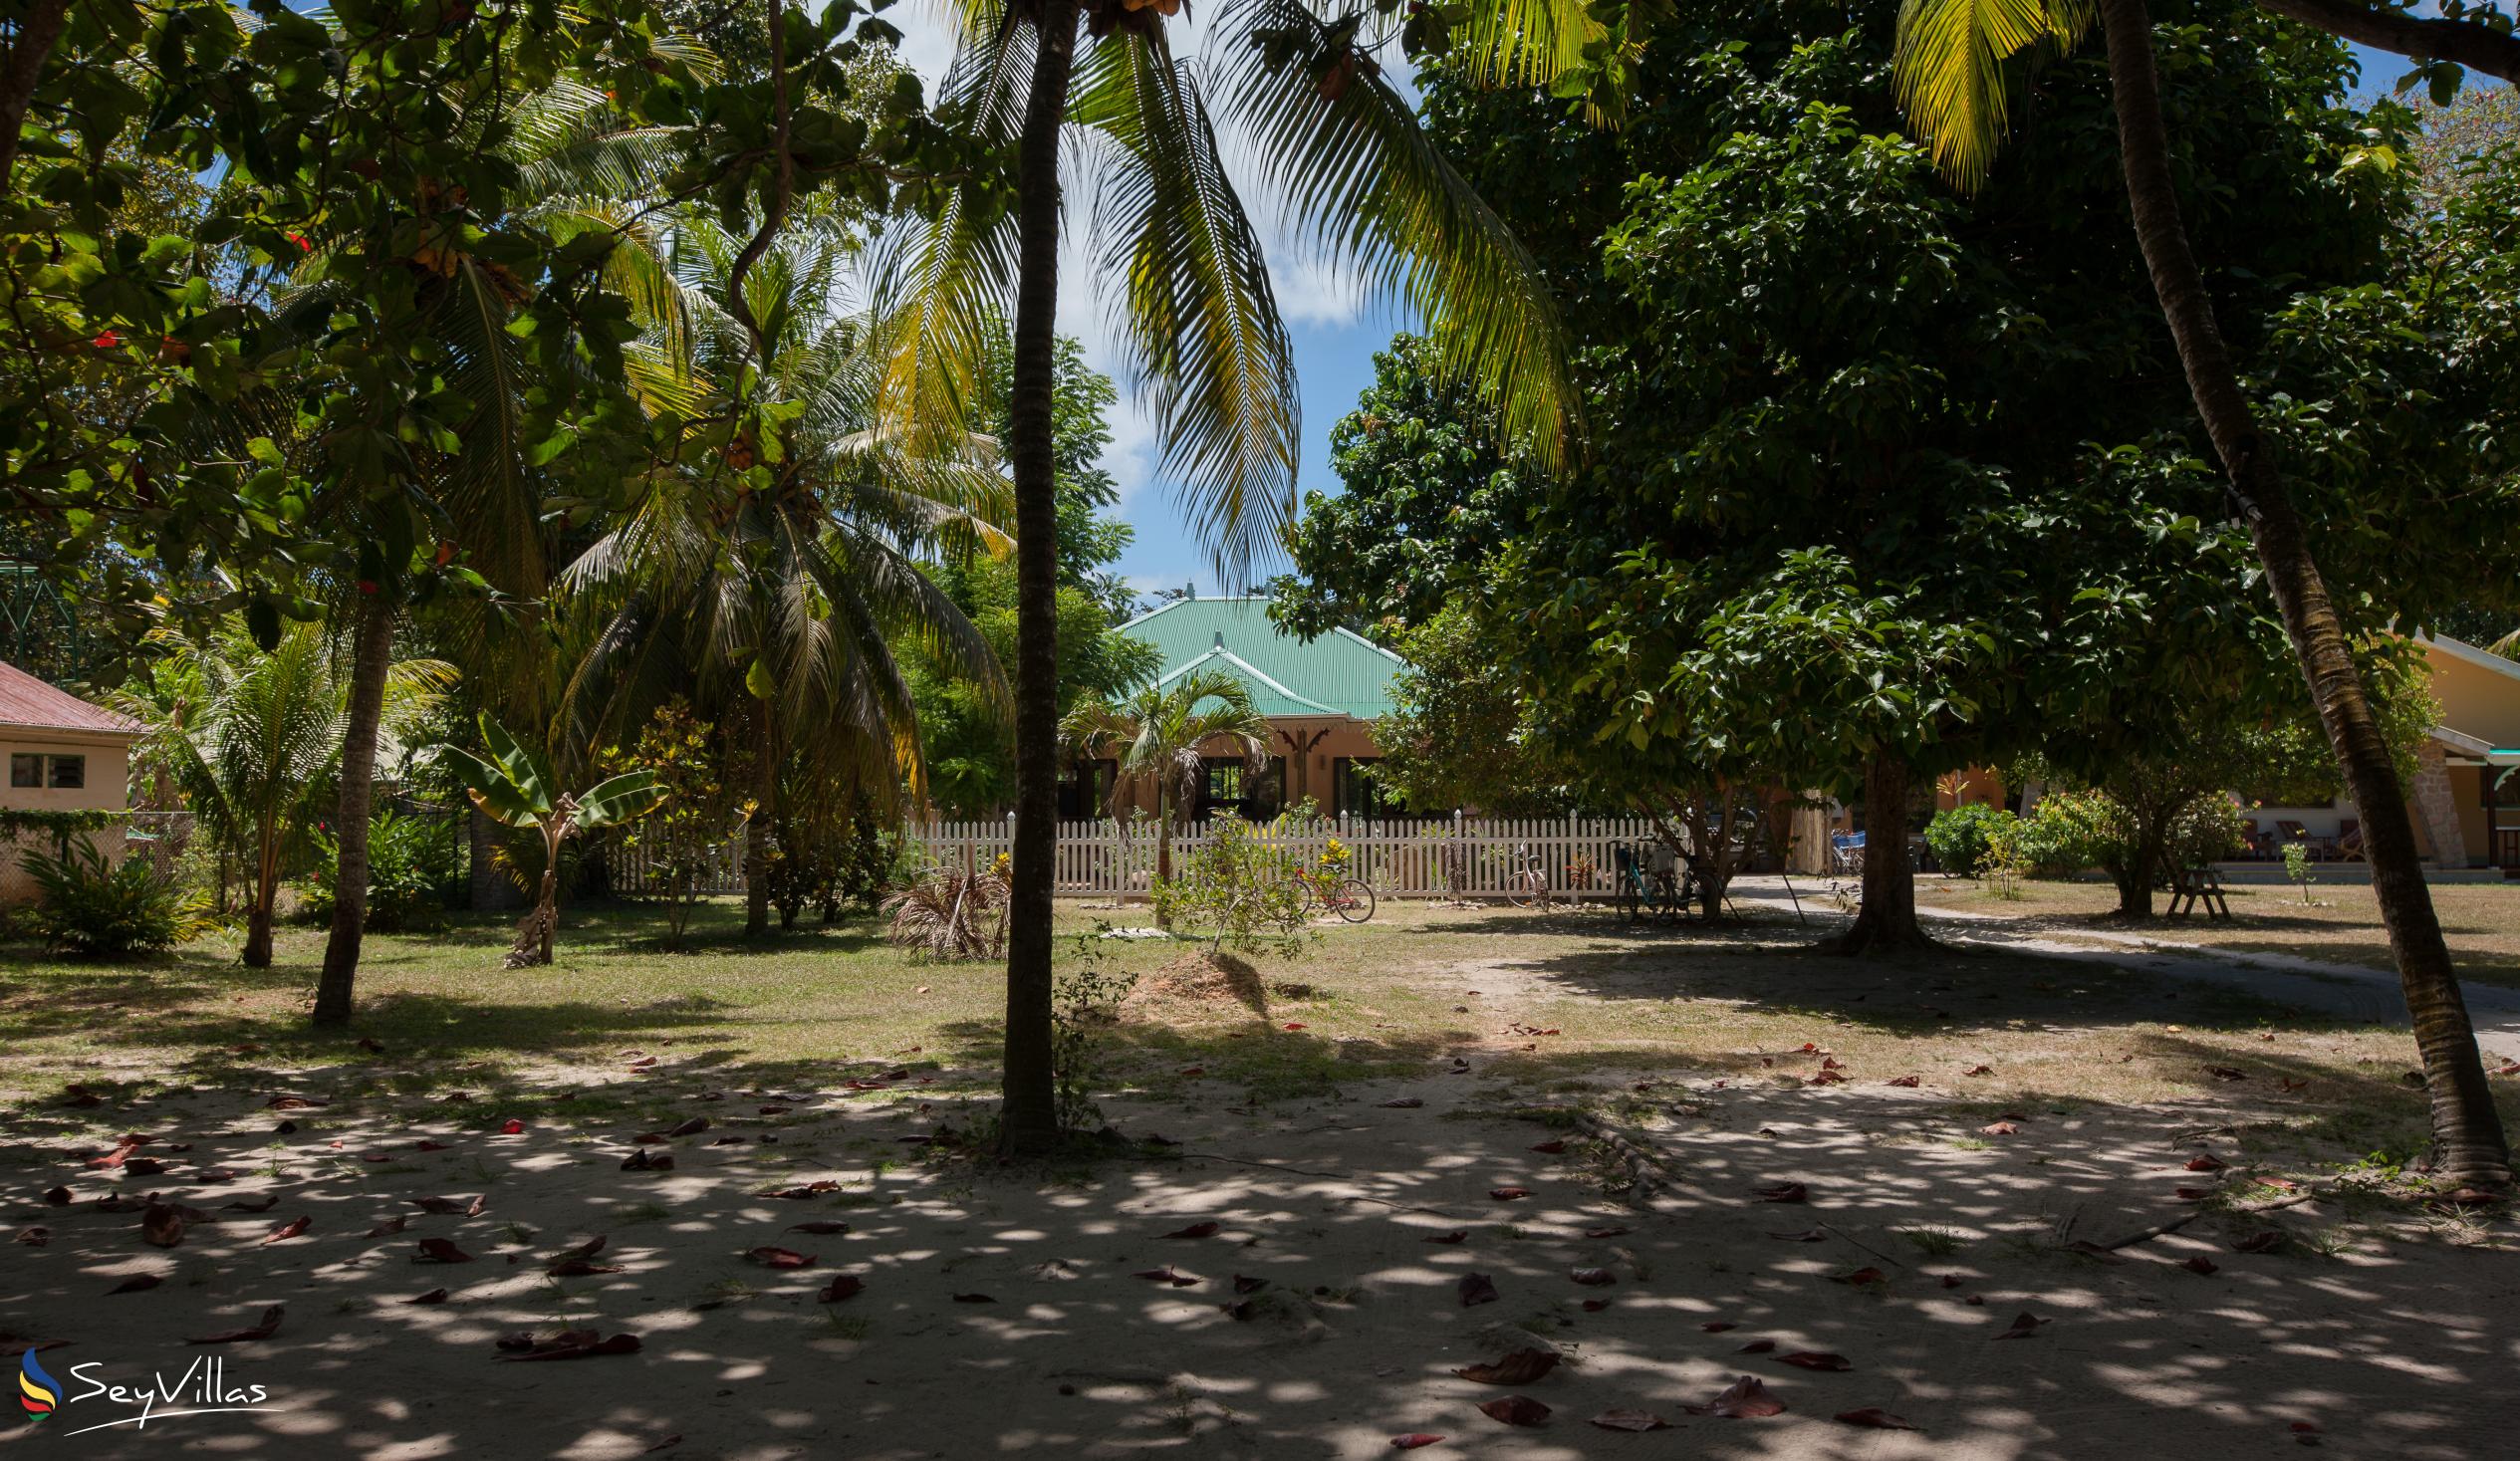 Foto 94: Casa de Leela - Aussenbereich - La Digue (Seychellen)